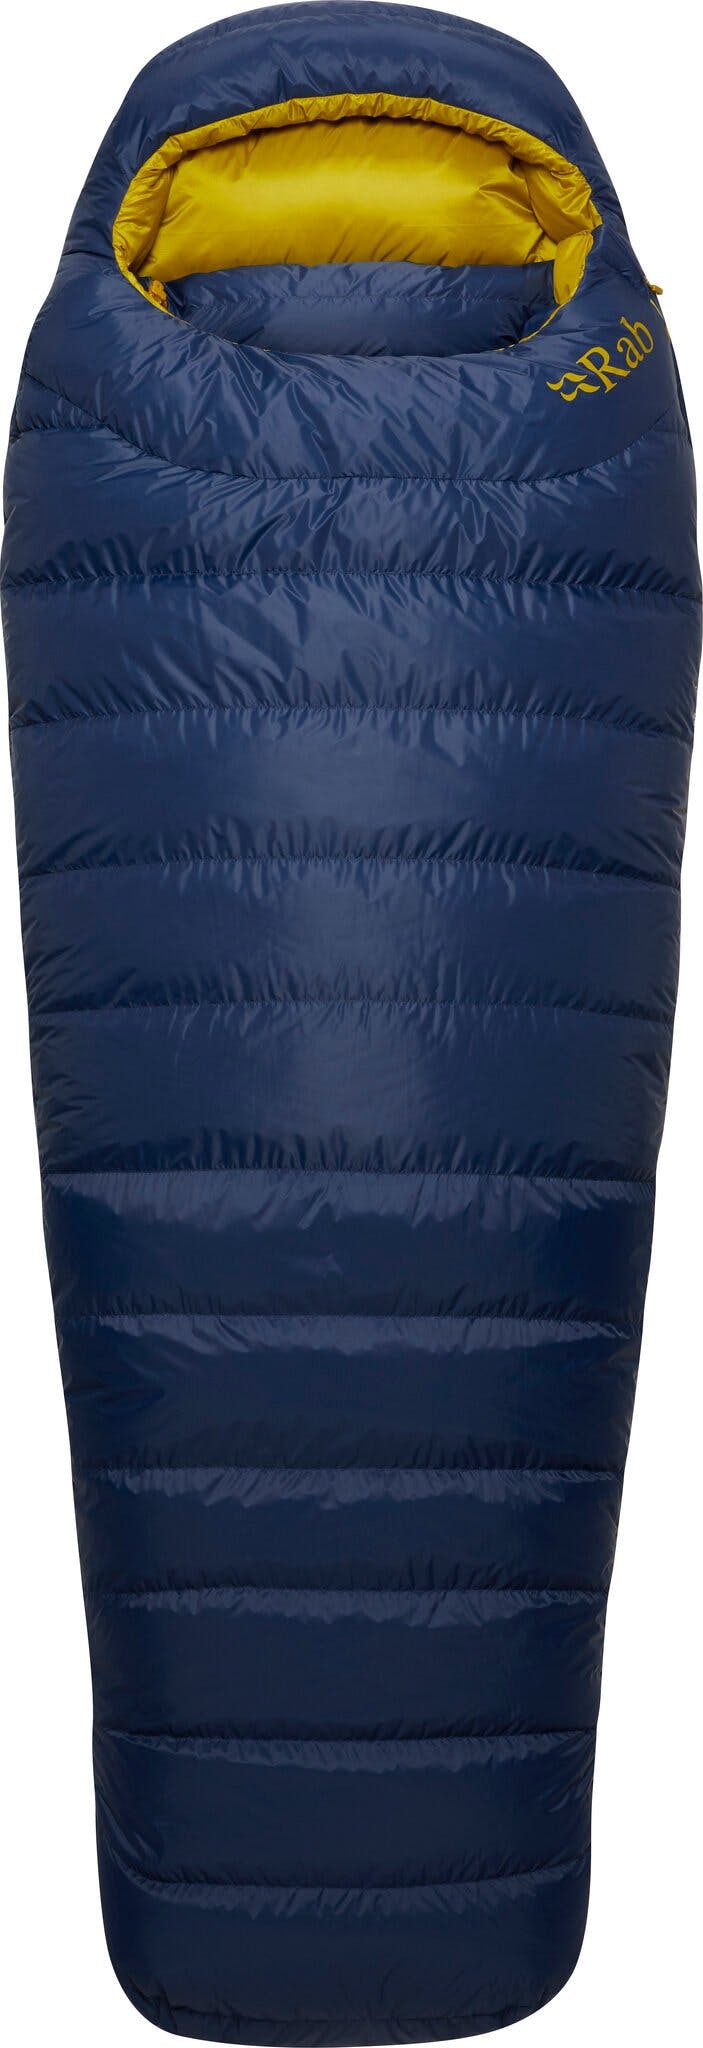 Product image for Ascent Pro 600 Down Sleeping Bag Left Zip - Regular -7C / 20F - Women's